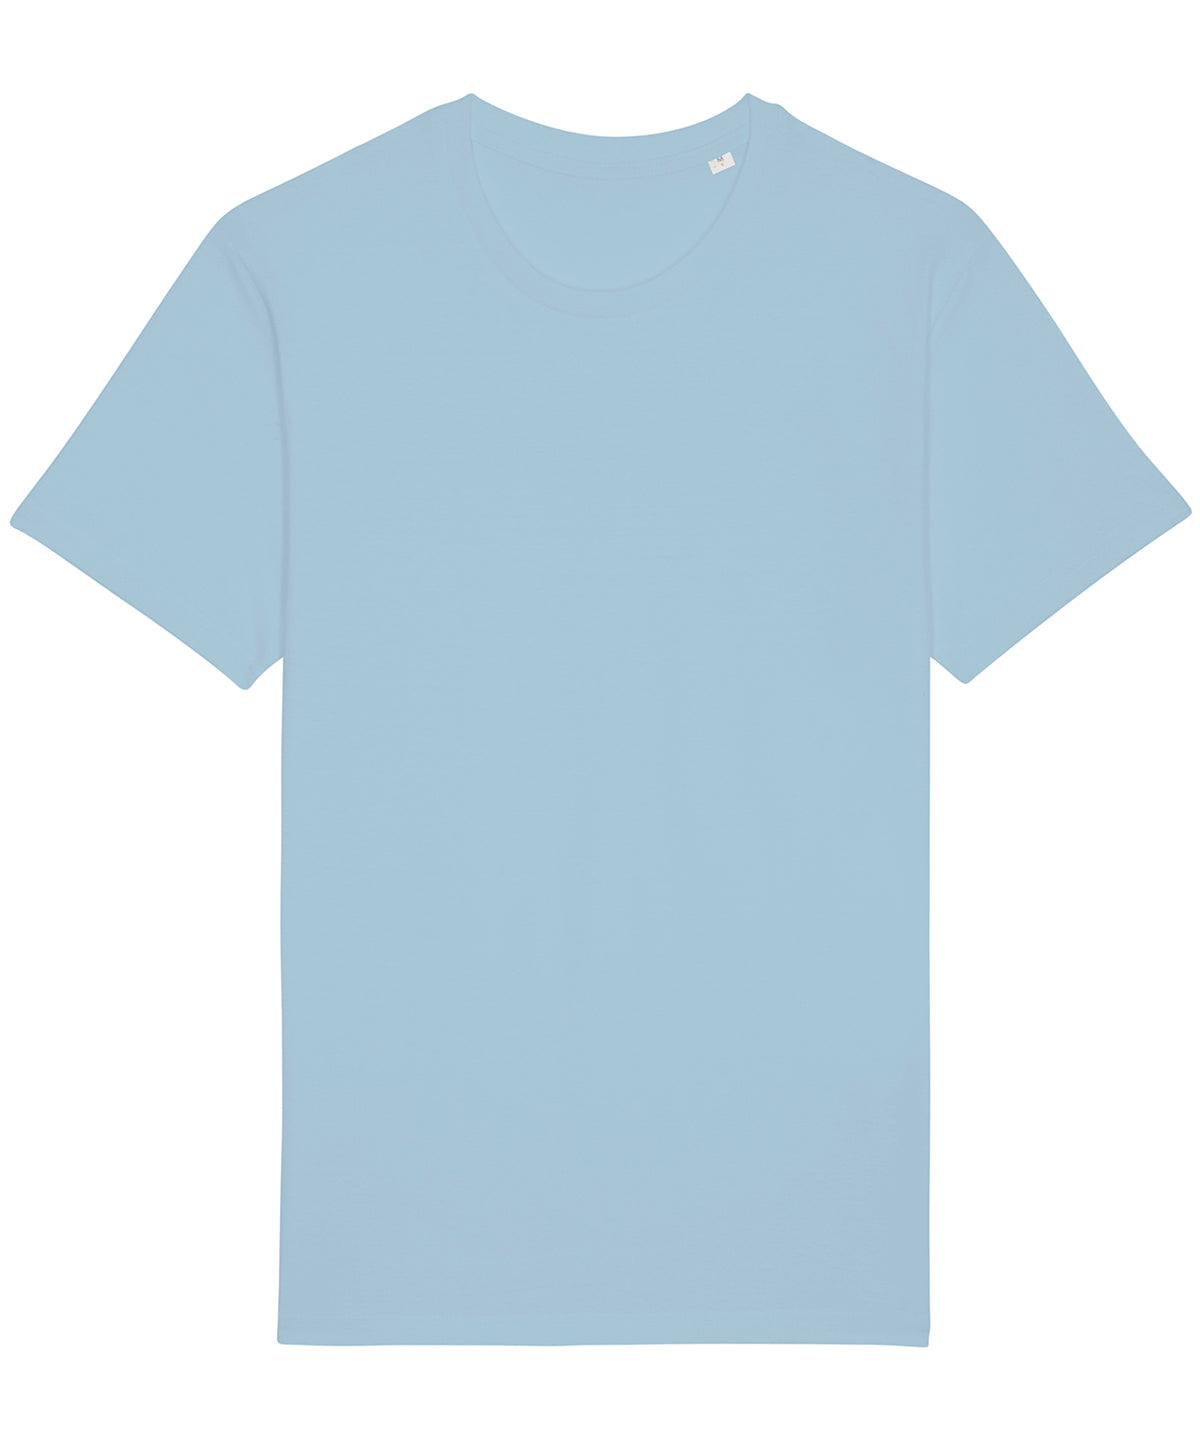 Stanley/Stella Rocker The Essential Unisex T-Shirt  Sky Blue